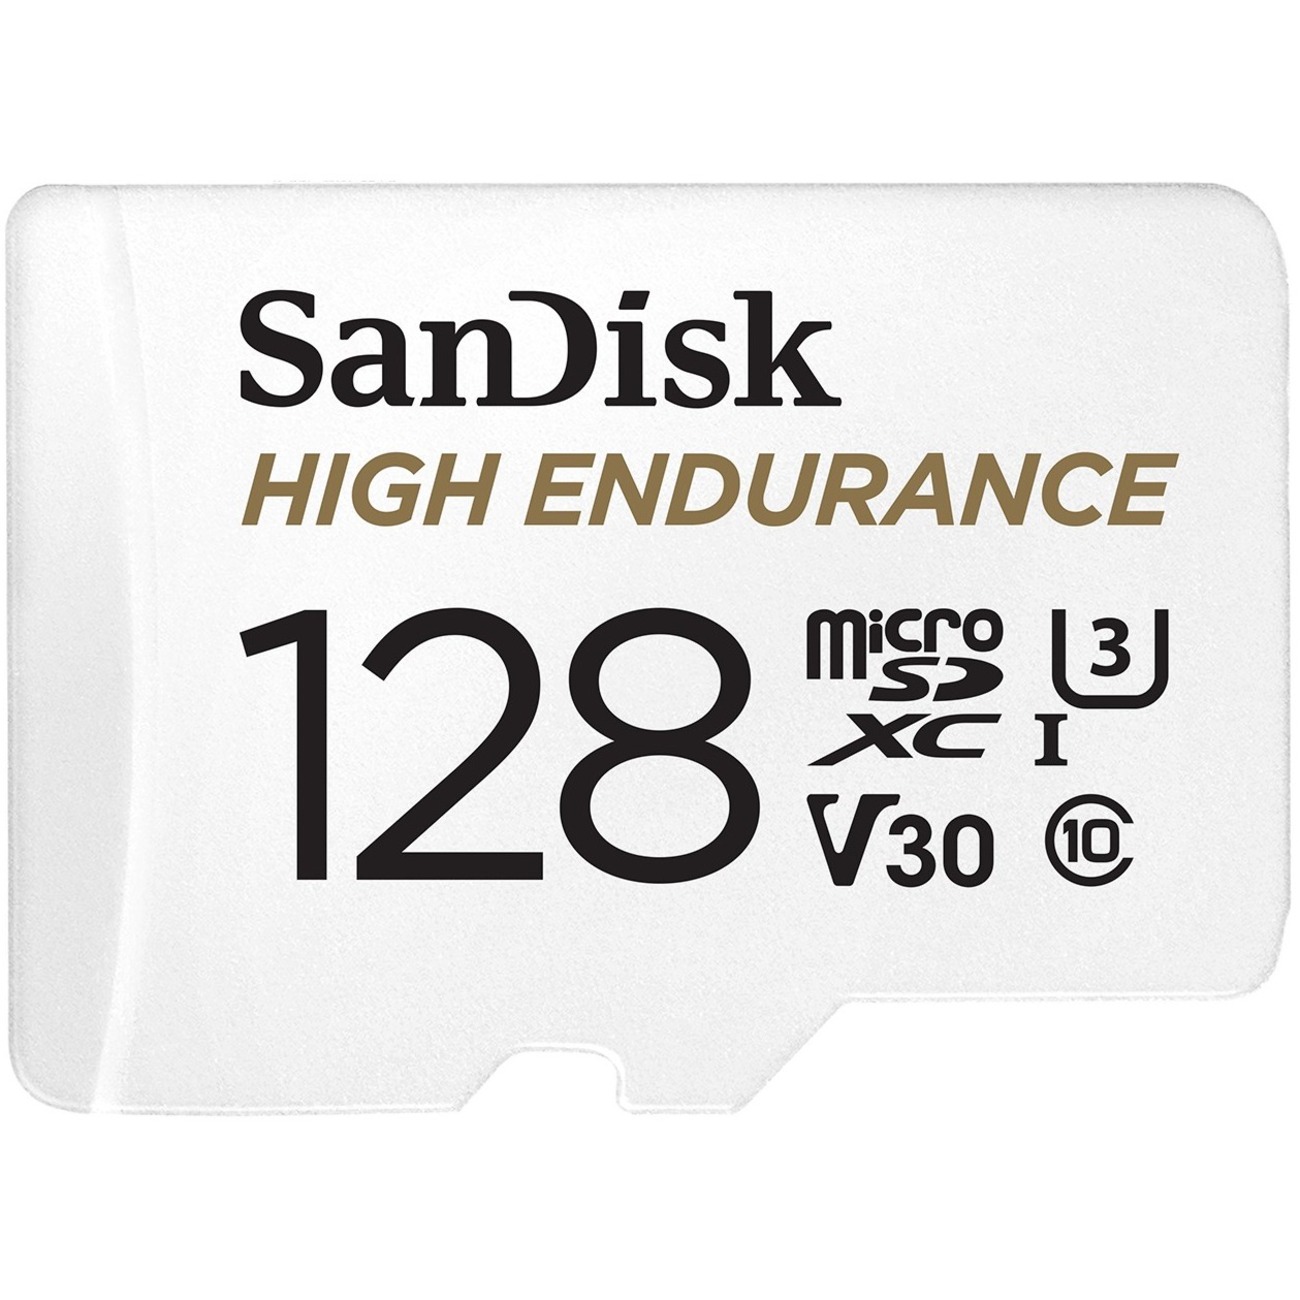 SanDisk 128GB High Endurance microSDXC Memory Card - SDSQQNR-128G-GN6IA - image 2 of 2